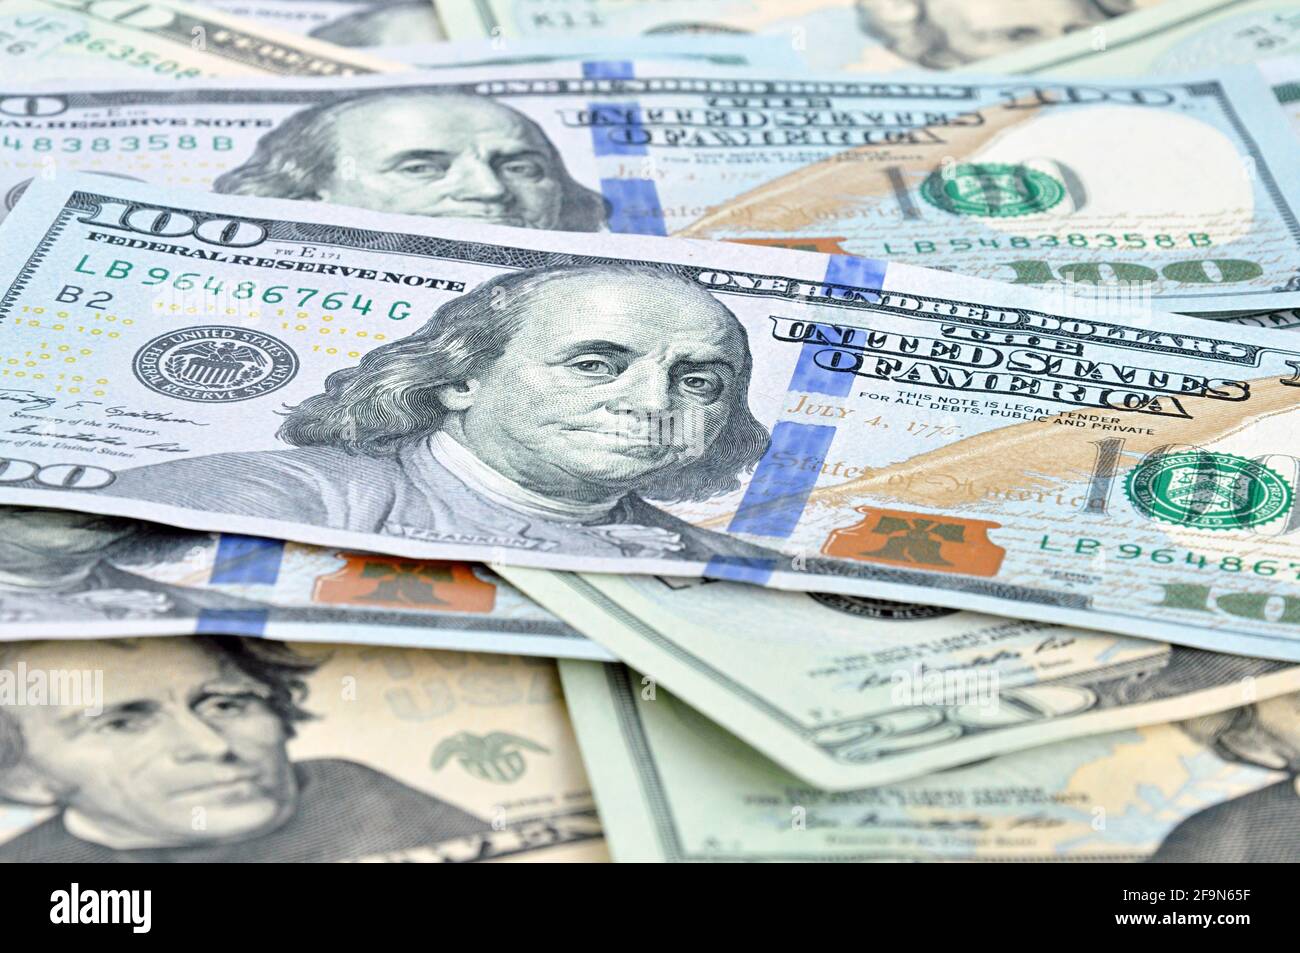 Money - United States dollars (USD) bills Stock Photo